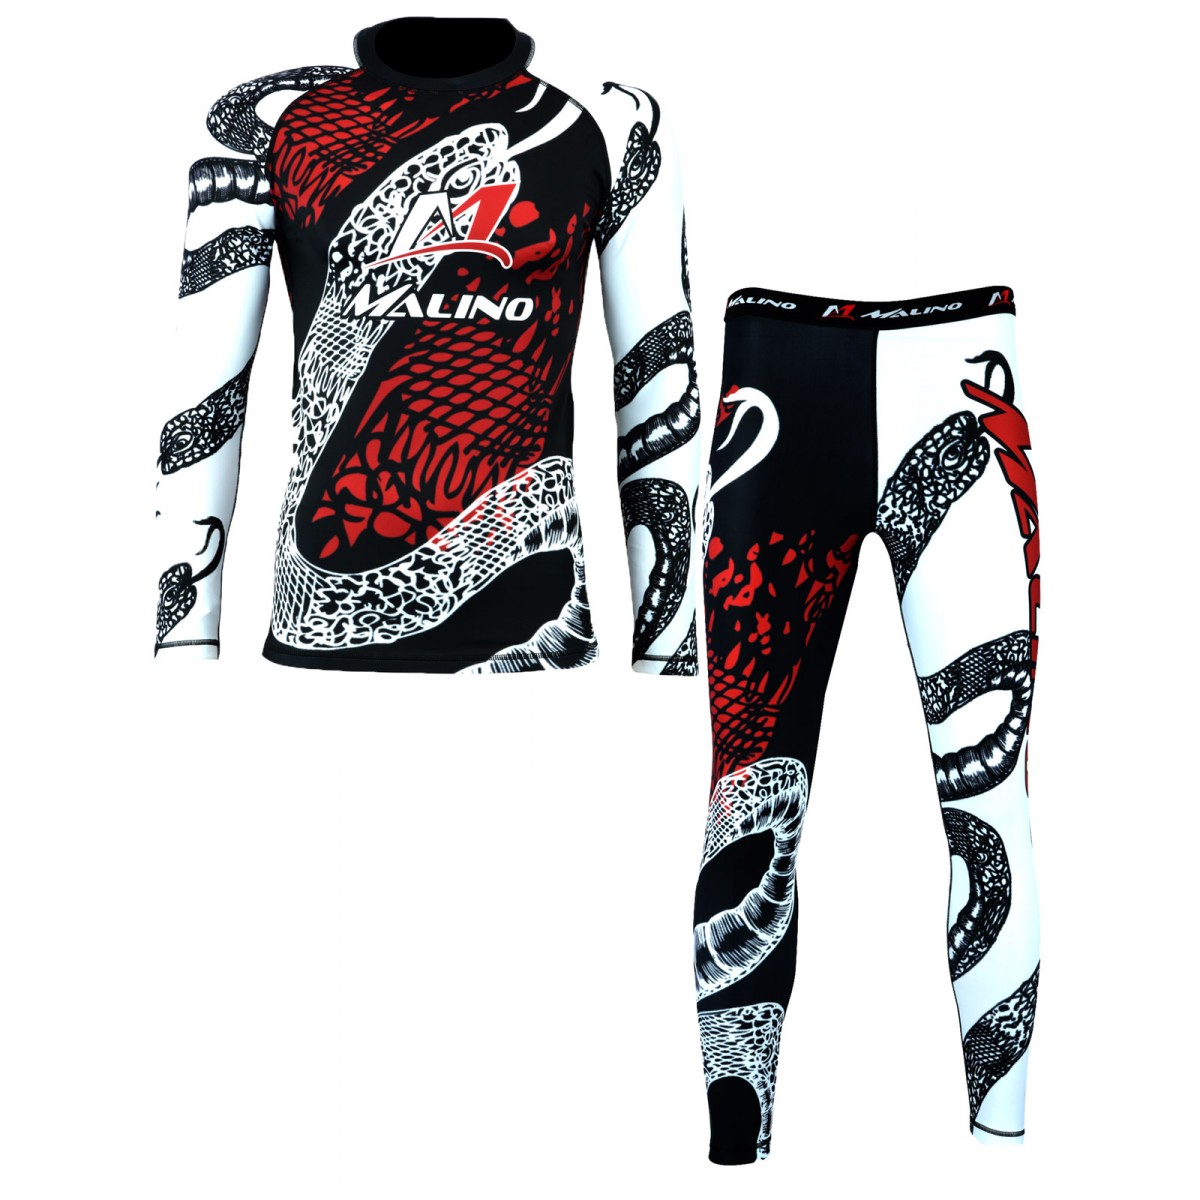 Rash Guard Suit for Men Black-White-Red